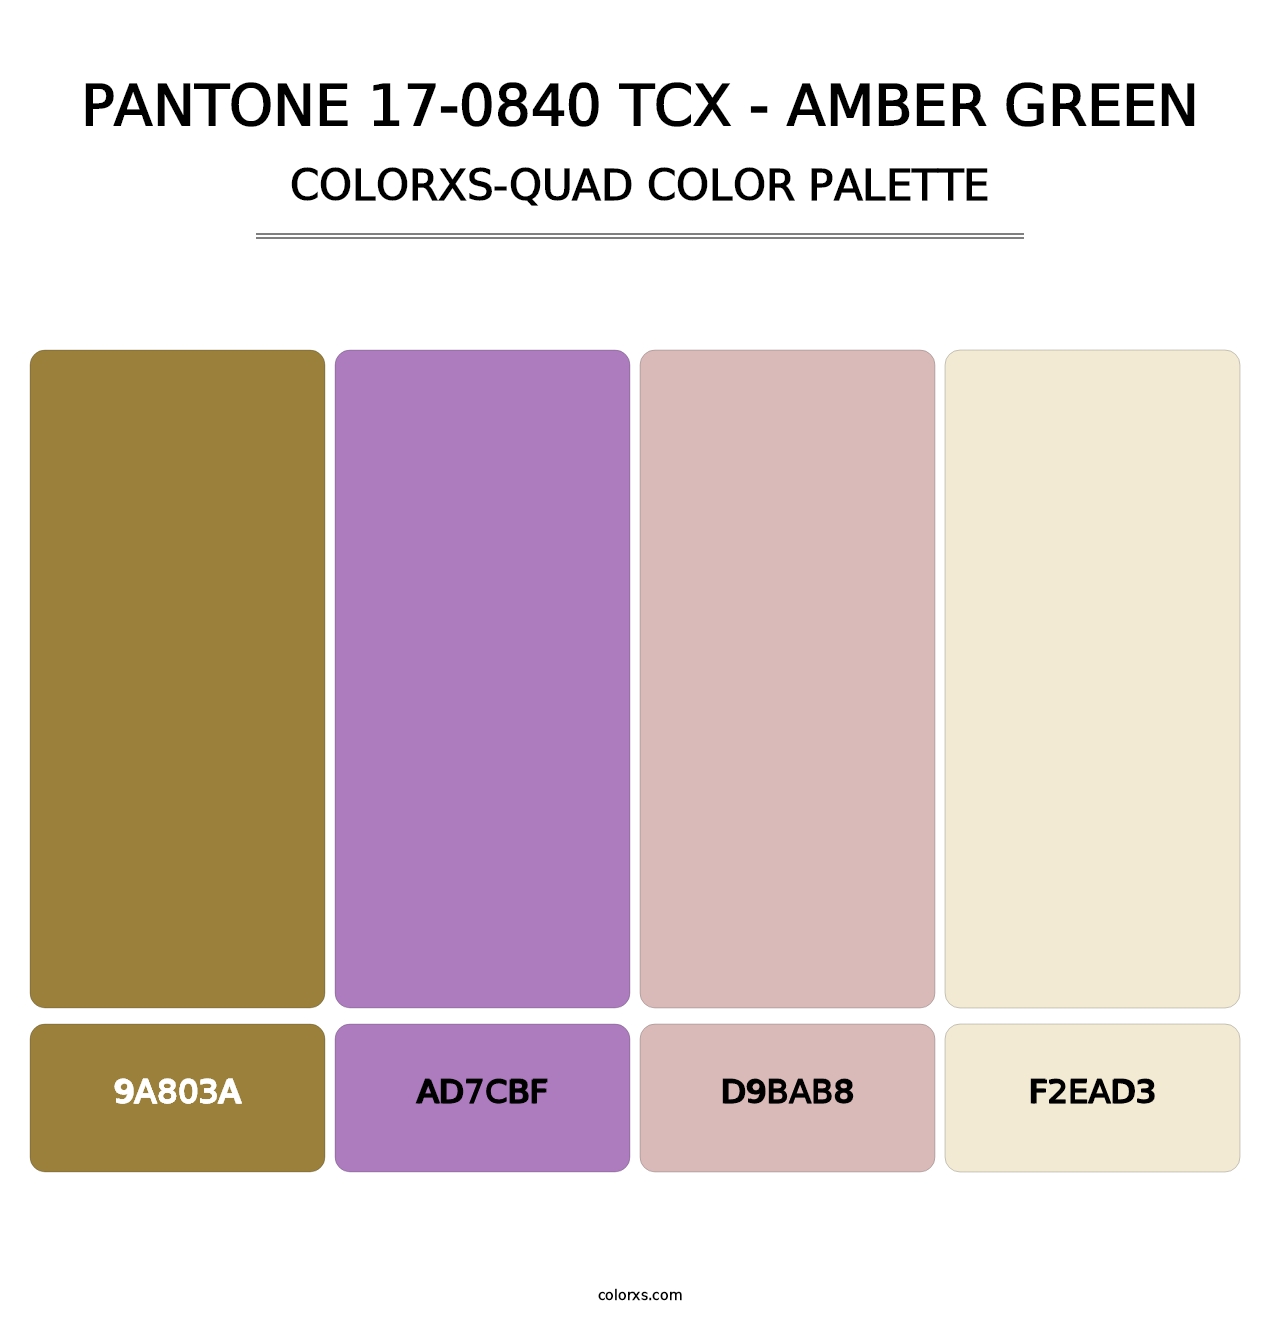 PANTONE 17-0840 TCX - Amber Green - Colorxs Quad Palette